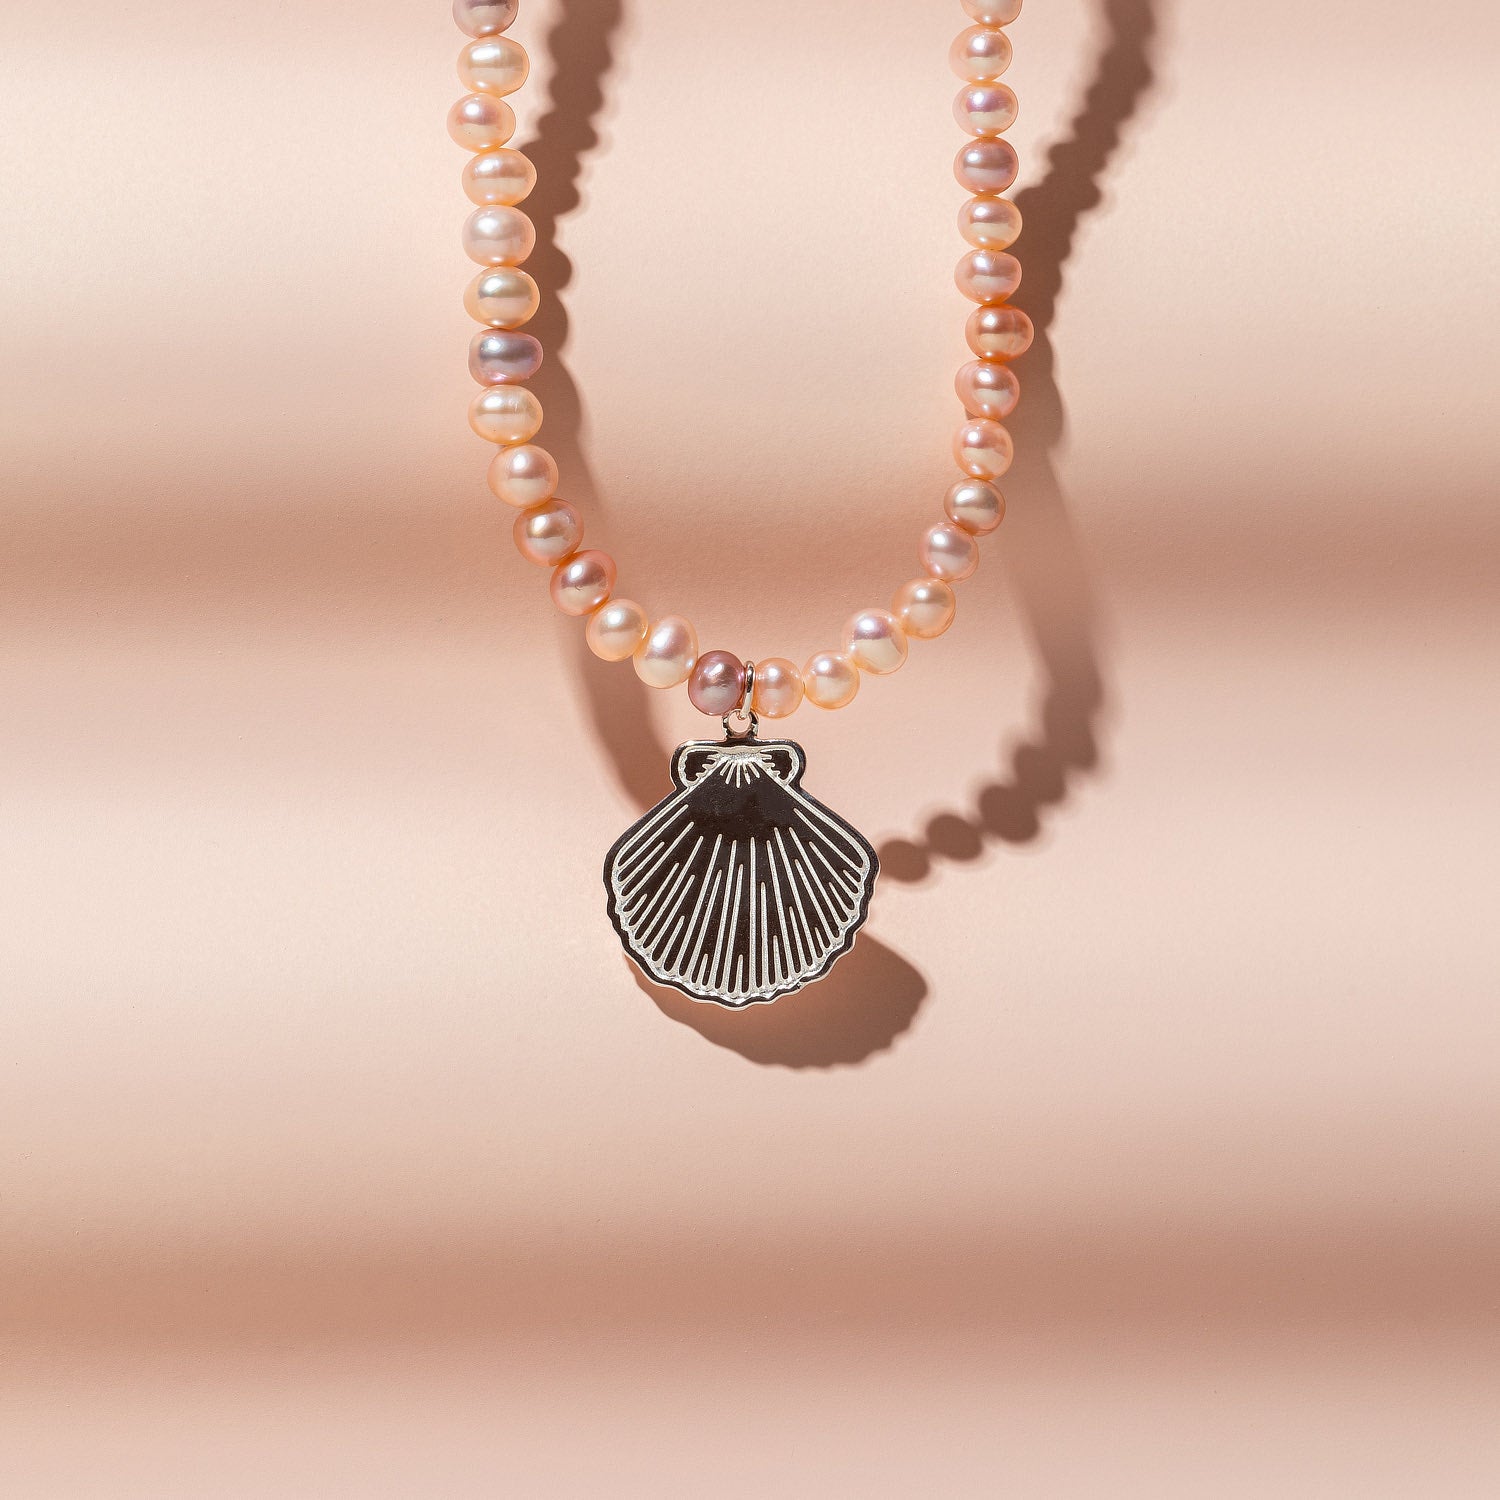 Fan shell pendant on peach pearl necklace - Simone Walsh Jewellery Australia